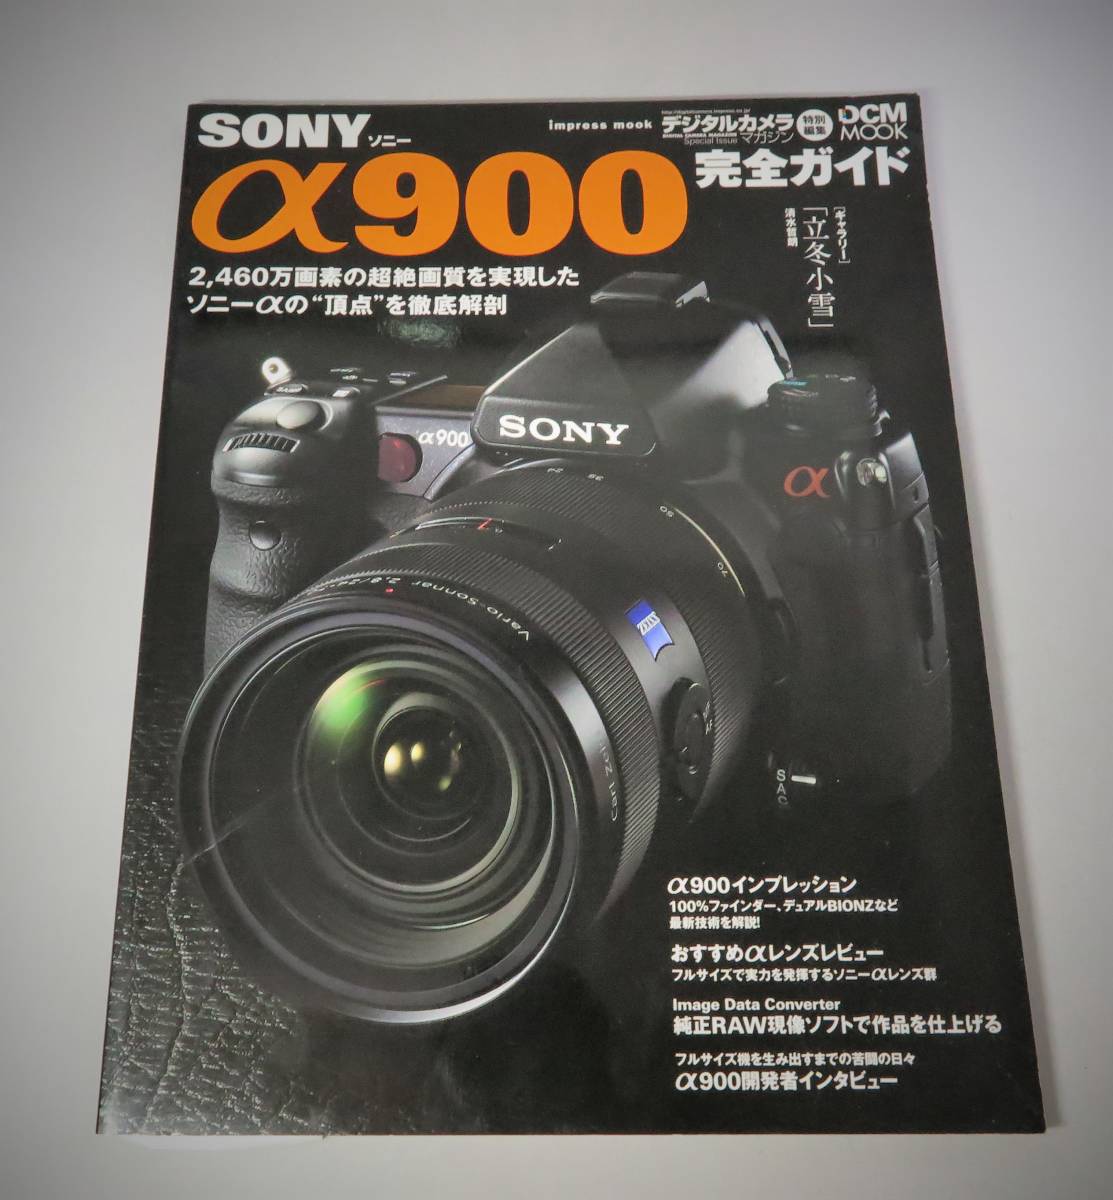 [ бесплатная доставка ] SONY Sony α900 полное руководство цифровая камера журнал 2008 год 